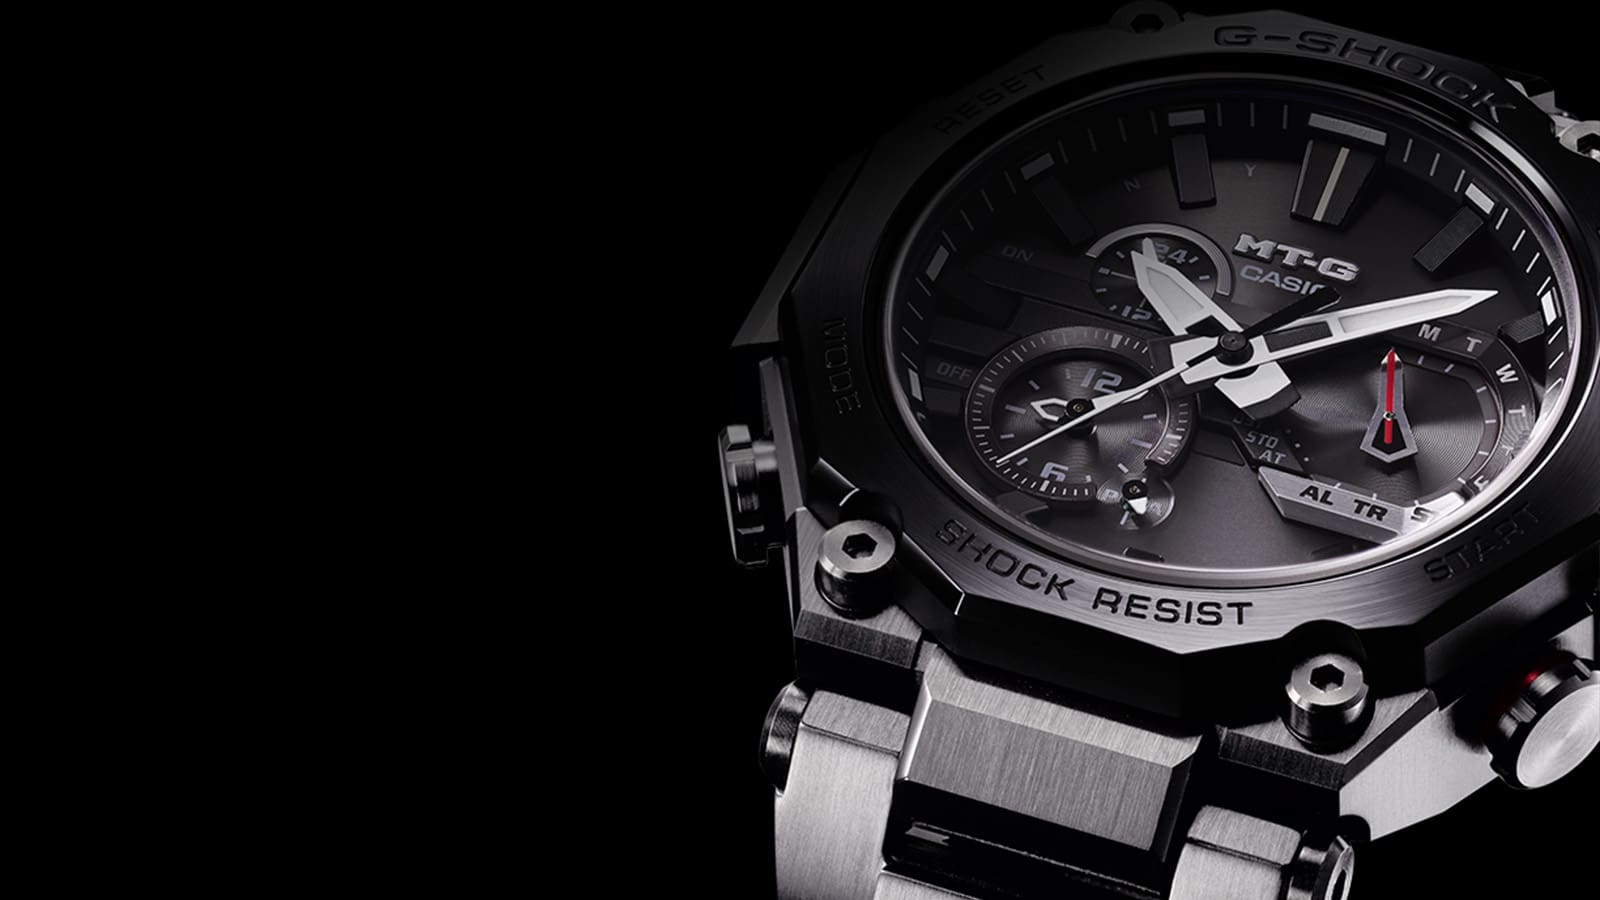 MTG-B2000 watch with black background